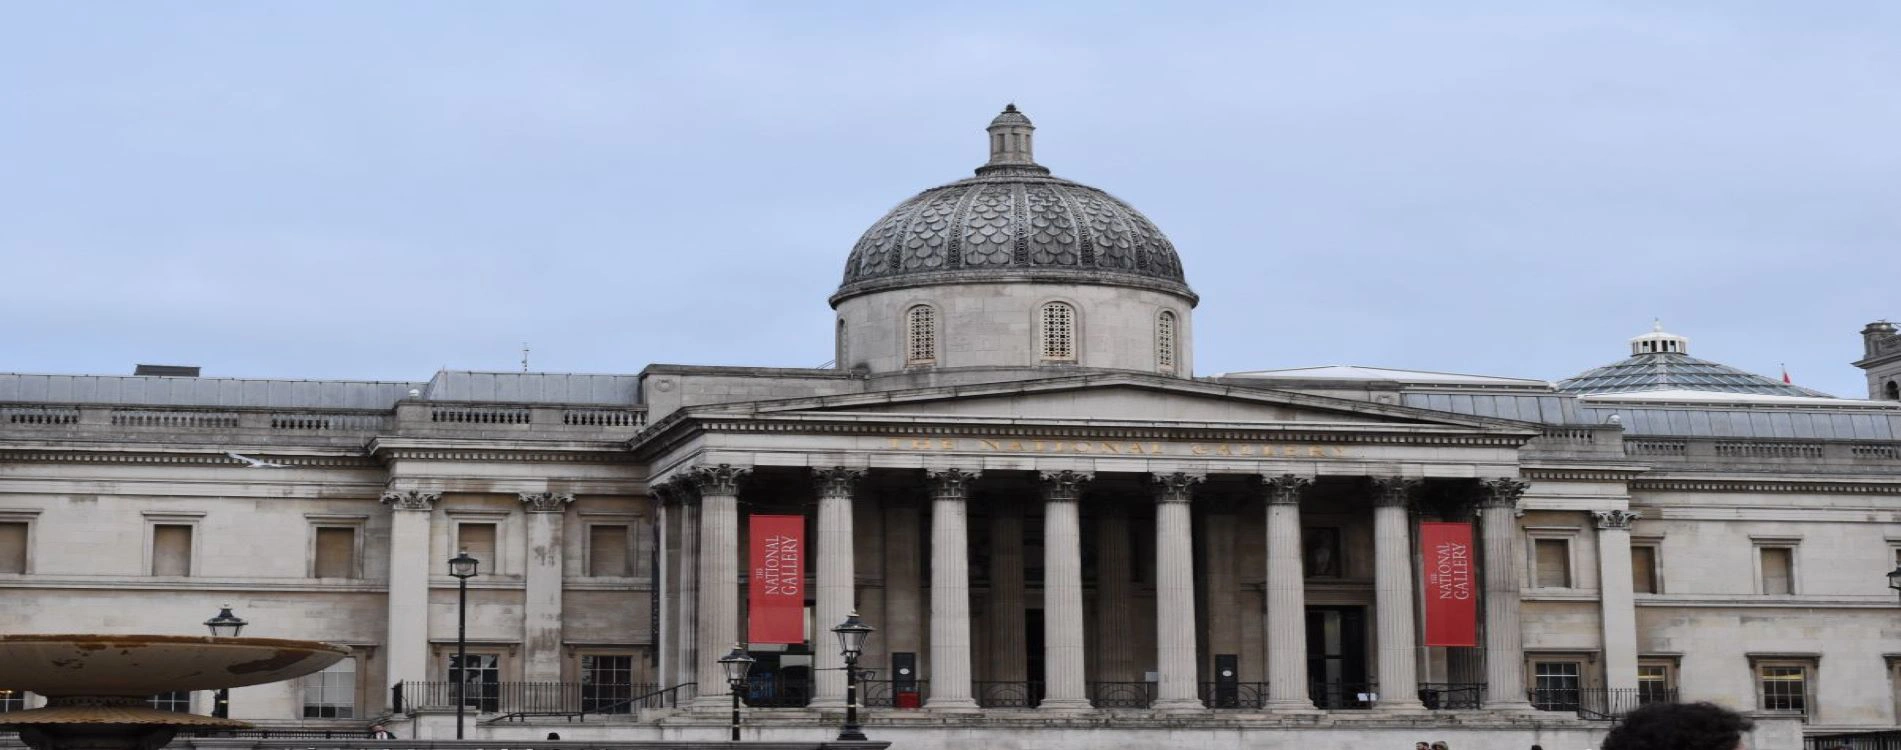 Explore معرض لندن الوطني 